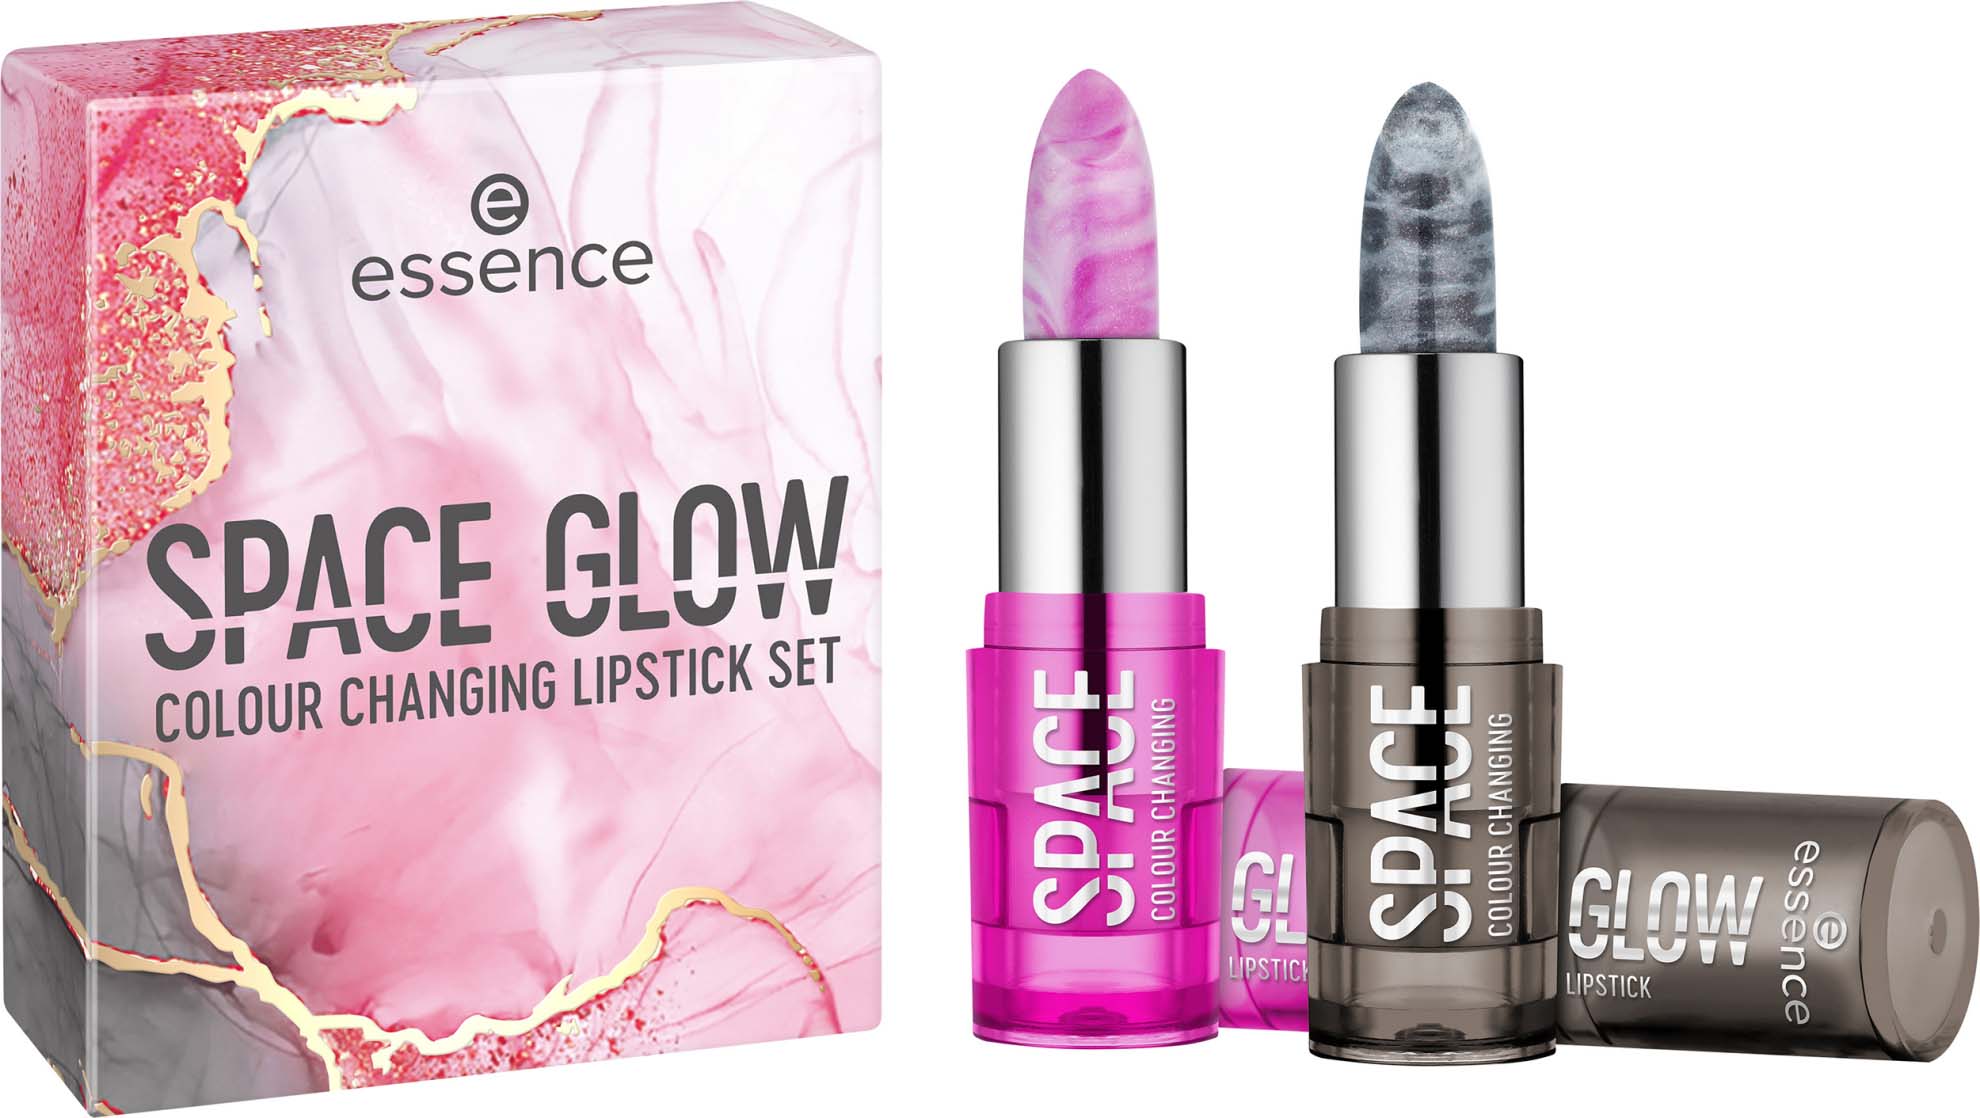 essence Space Glow Colour Changing Lipstick Set